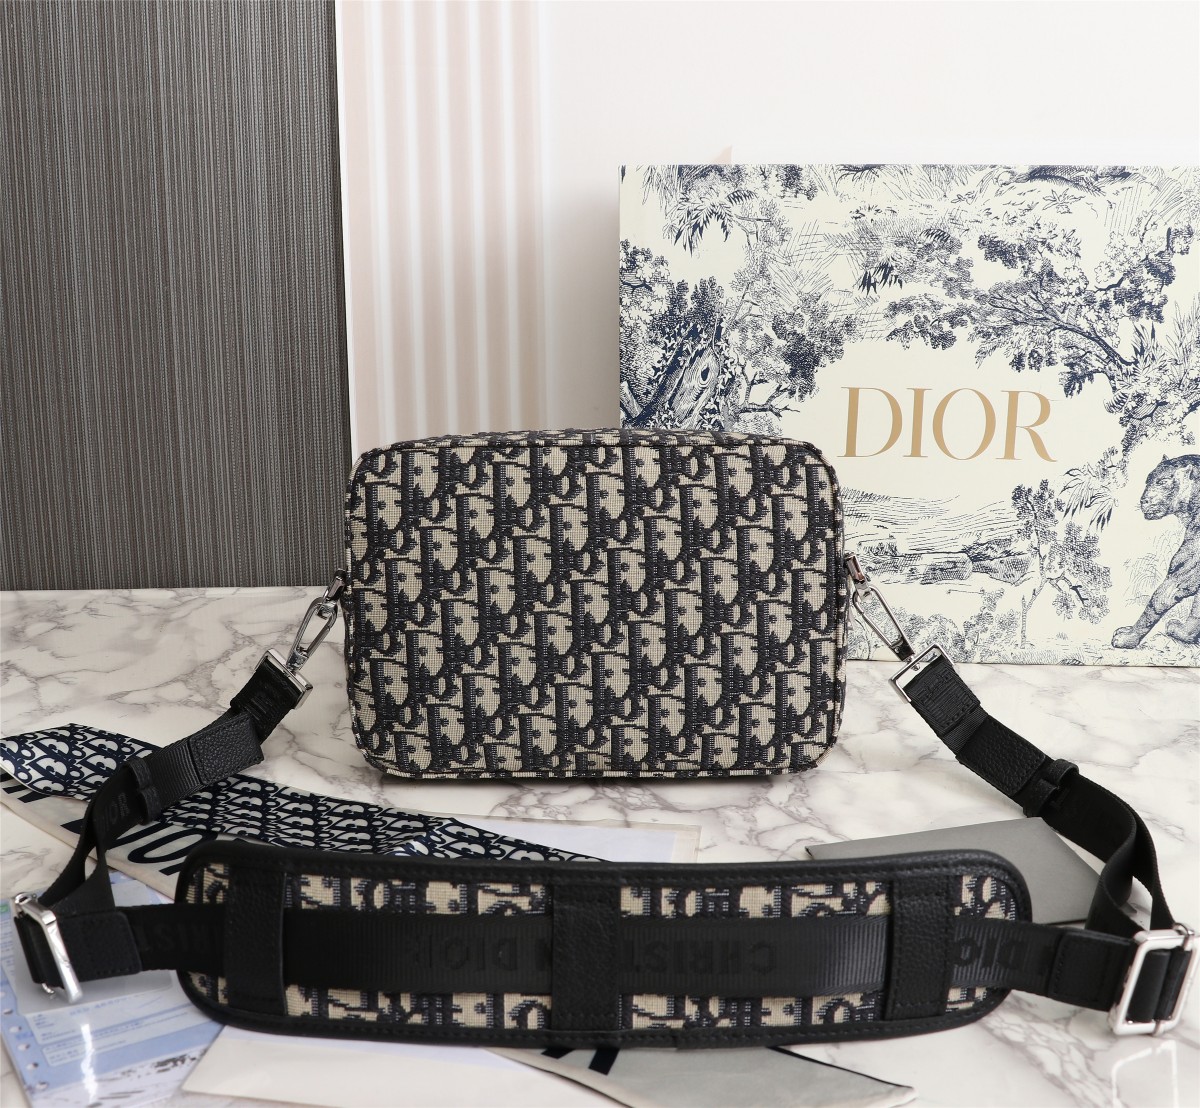 Dior Safari Messenger Bag Black/Beige - Theluxinbox